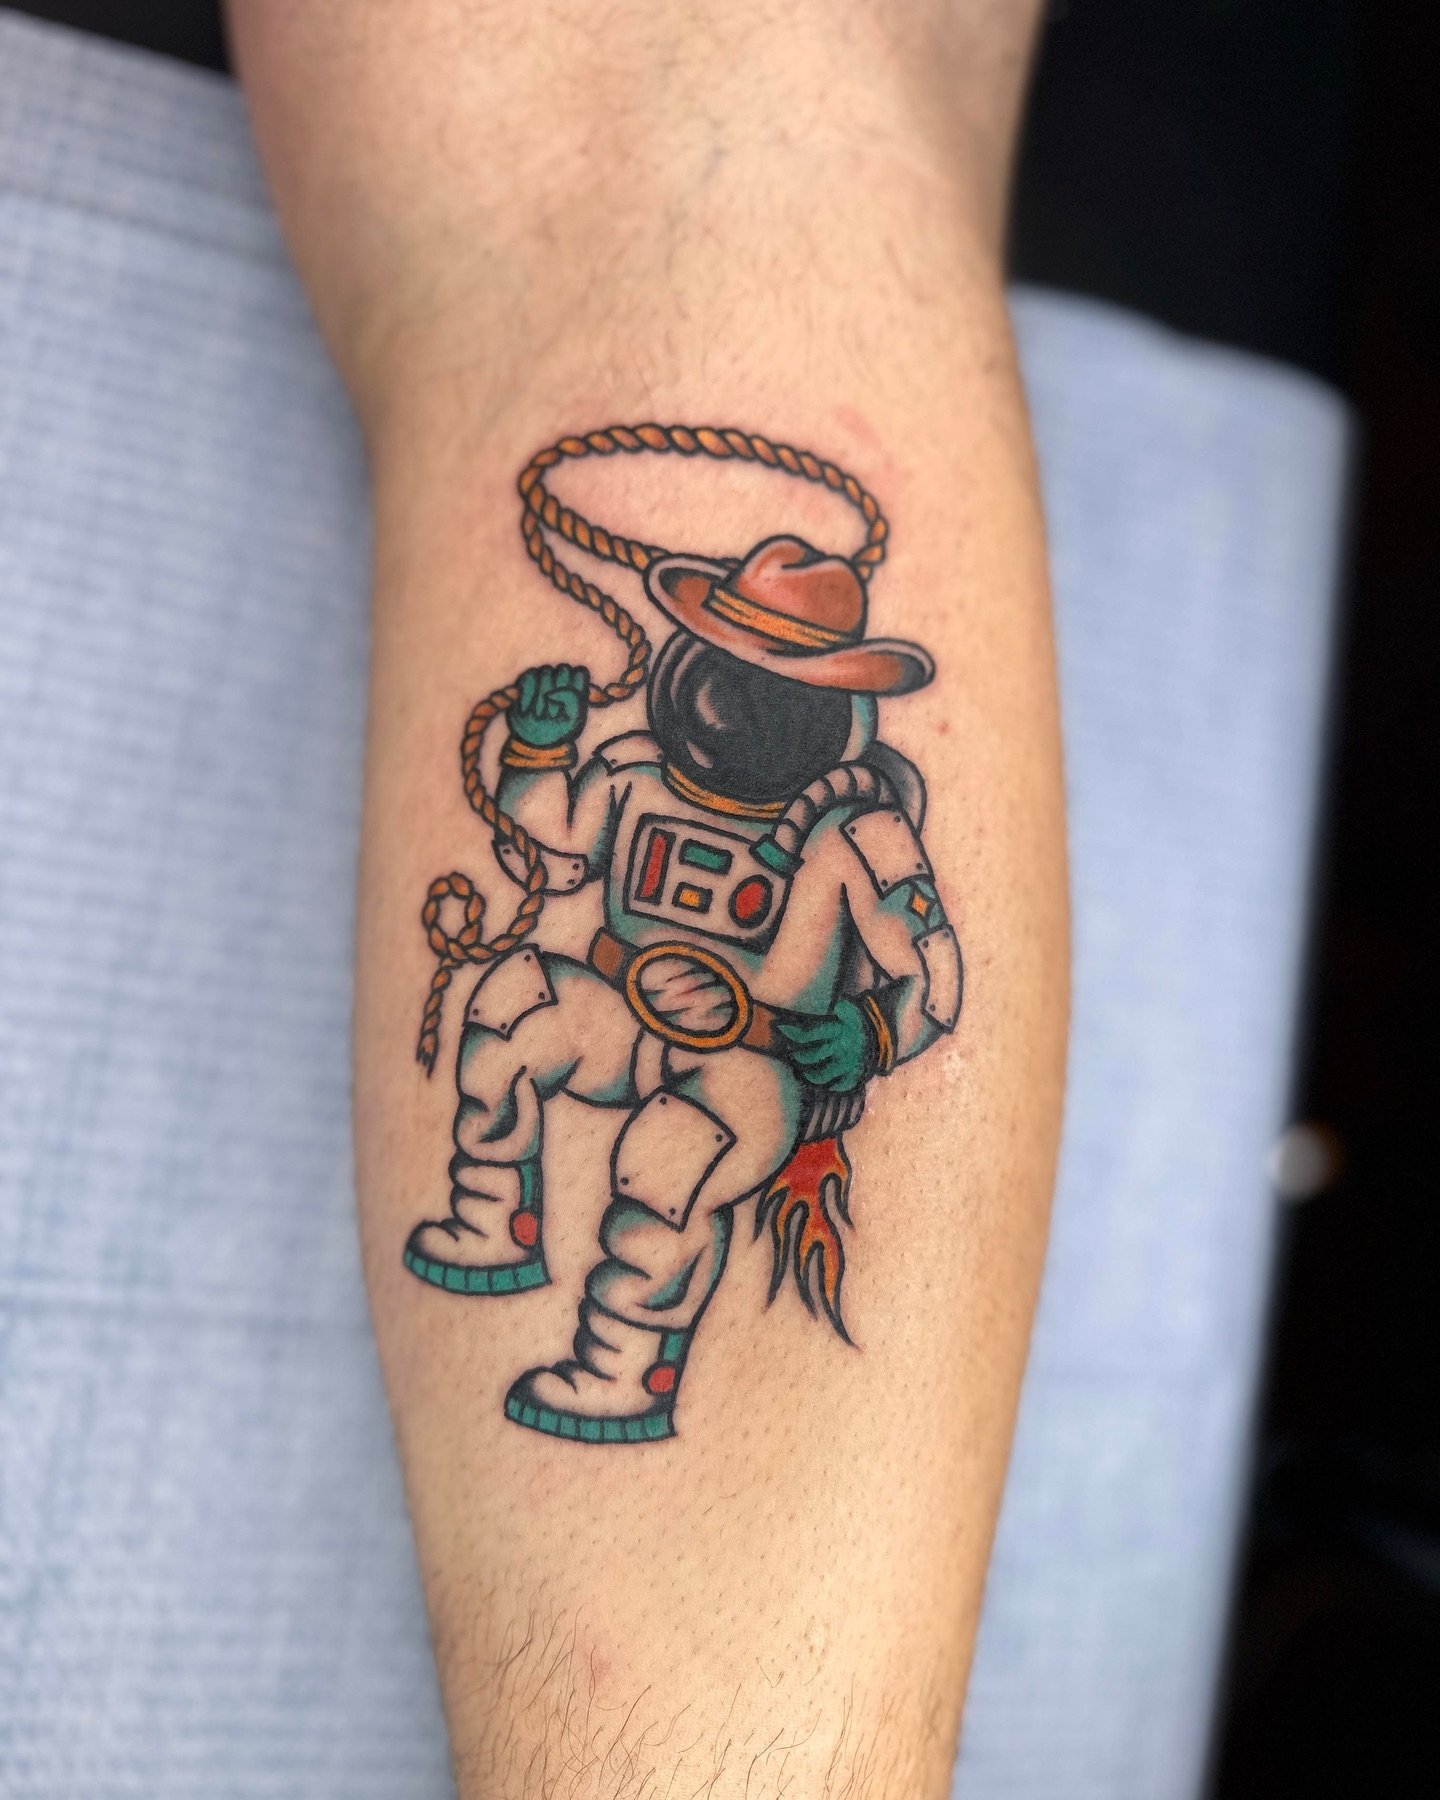 Space cowboy done by @han.tattoos at Obscura

#tattoos #tattoo #colortattoo #cowboytattoo #astronauttattoo #ottawa #ottawaartist #ottawaart